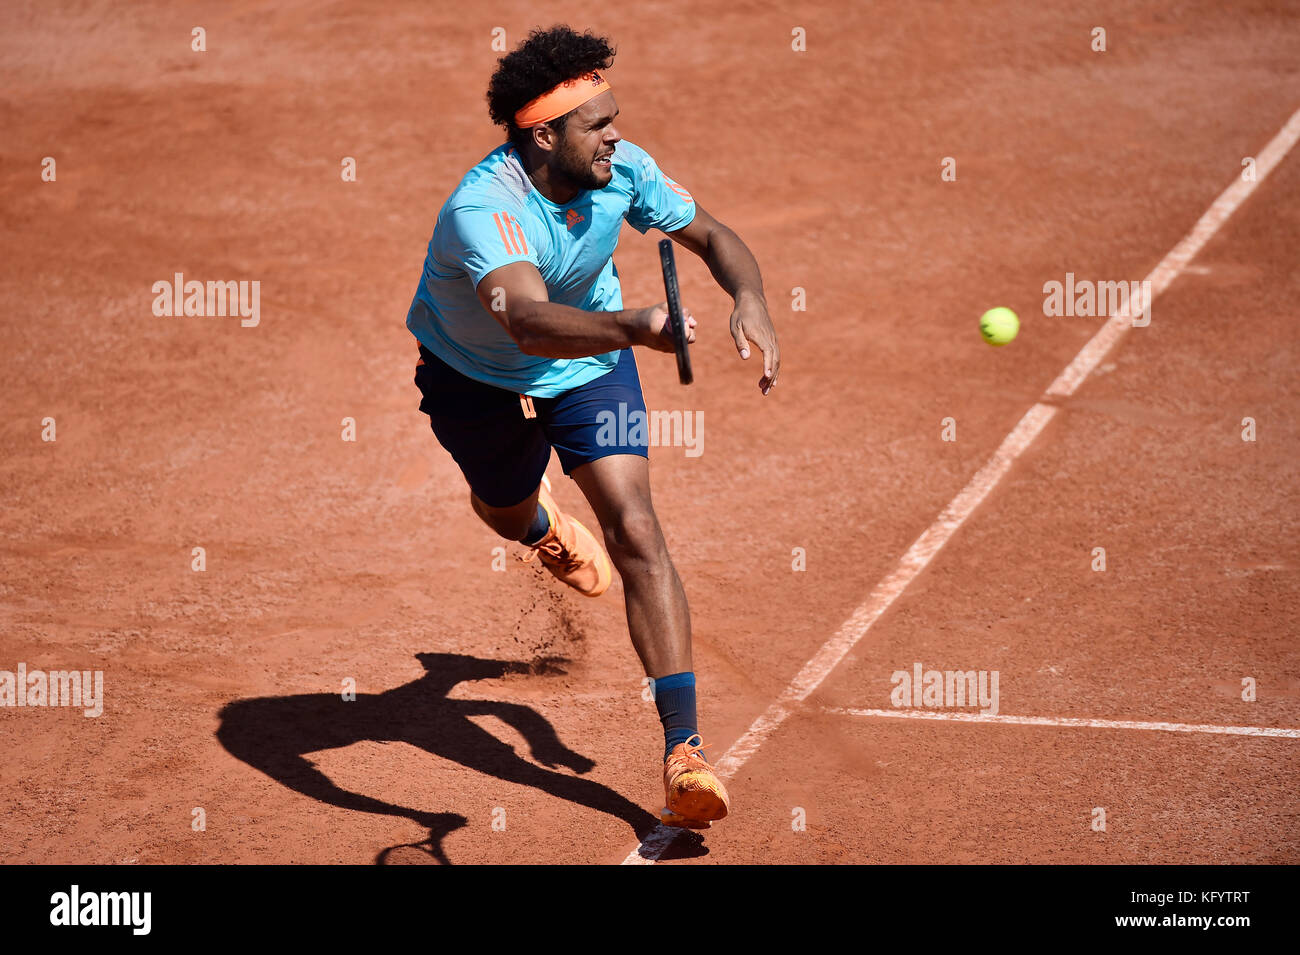 Lyon (south-eastern France), on 2016/05/26: professional tennis player Jo-Wildfried Tsonga won the semi-final match of the ATP World Tour 250 tourname Stock Photo